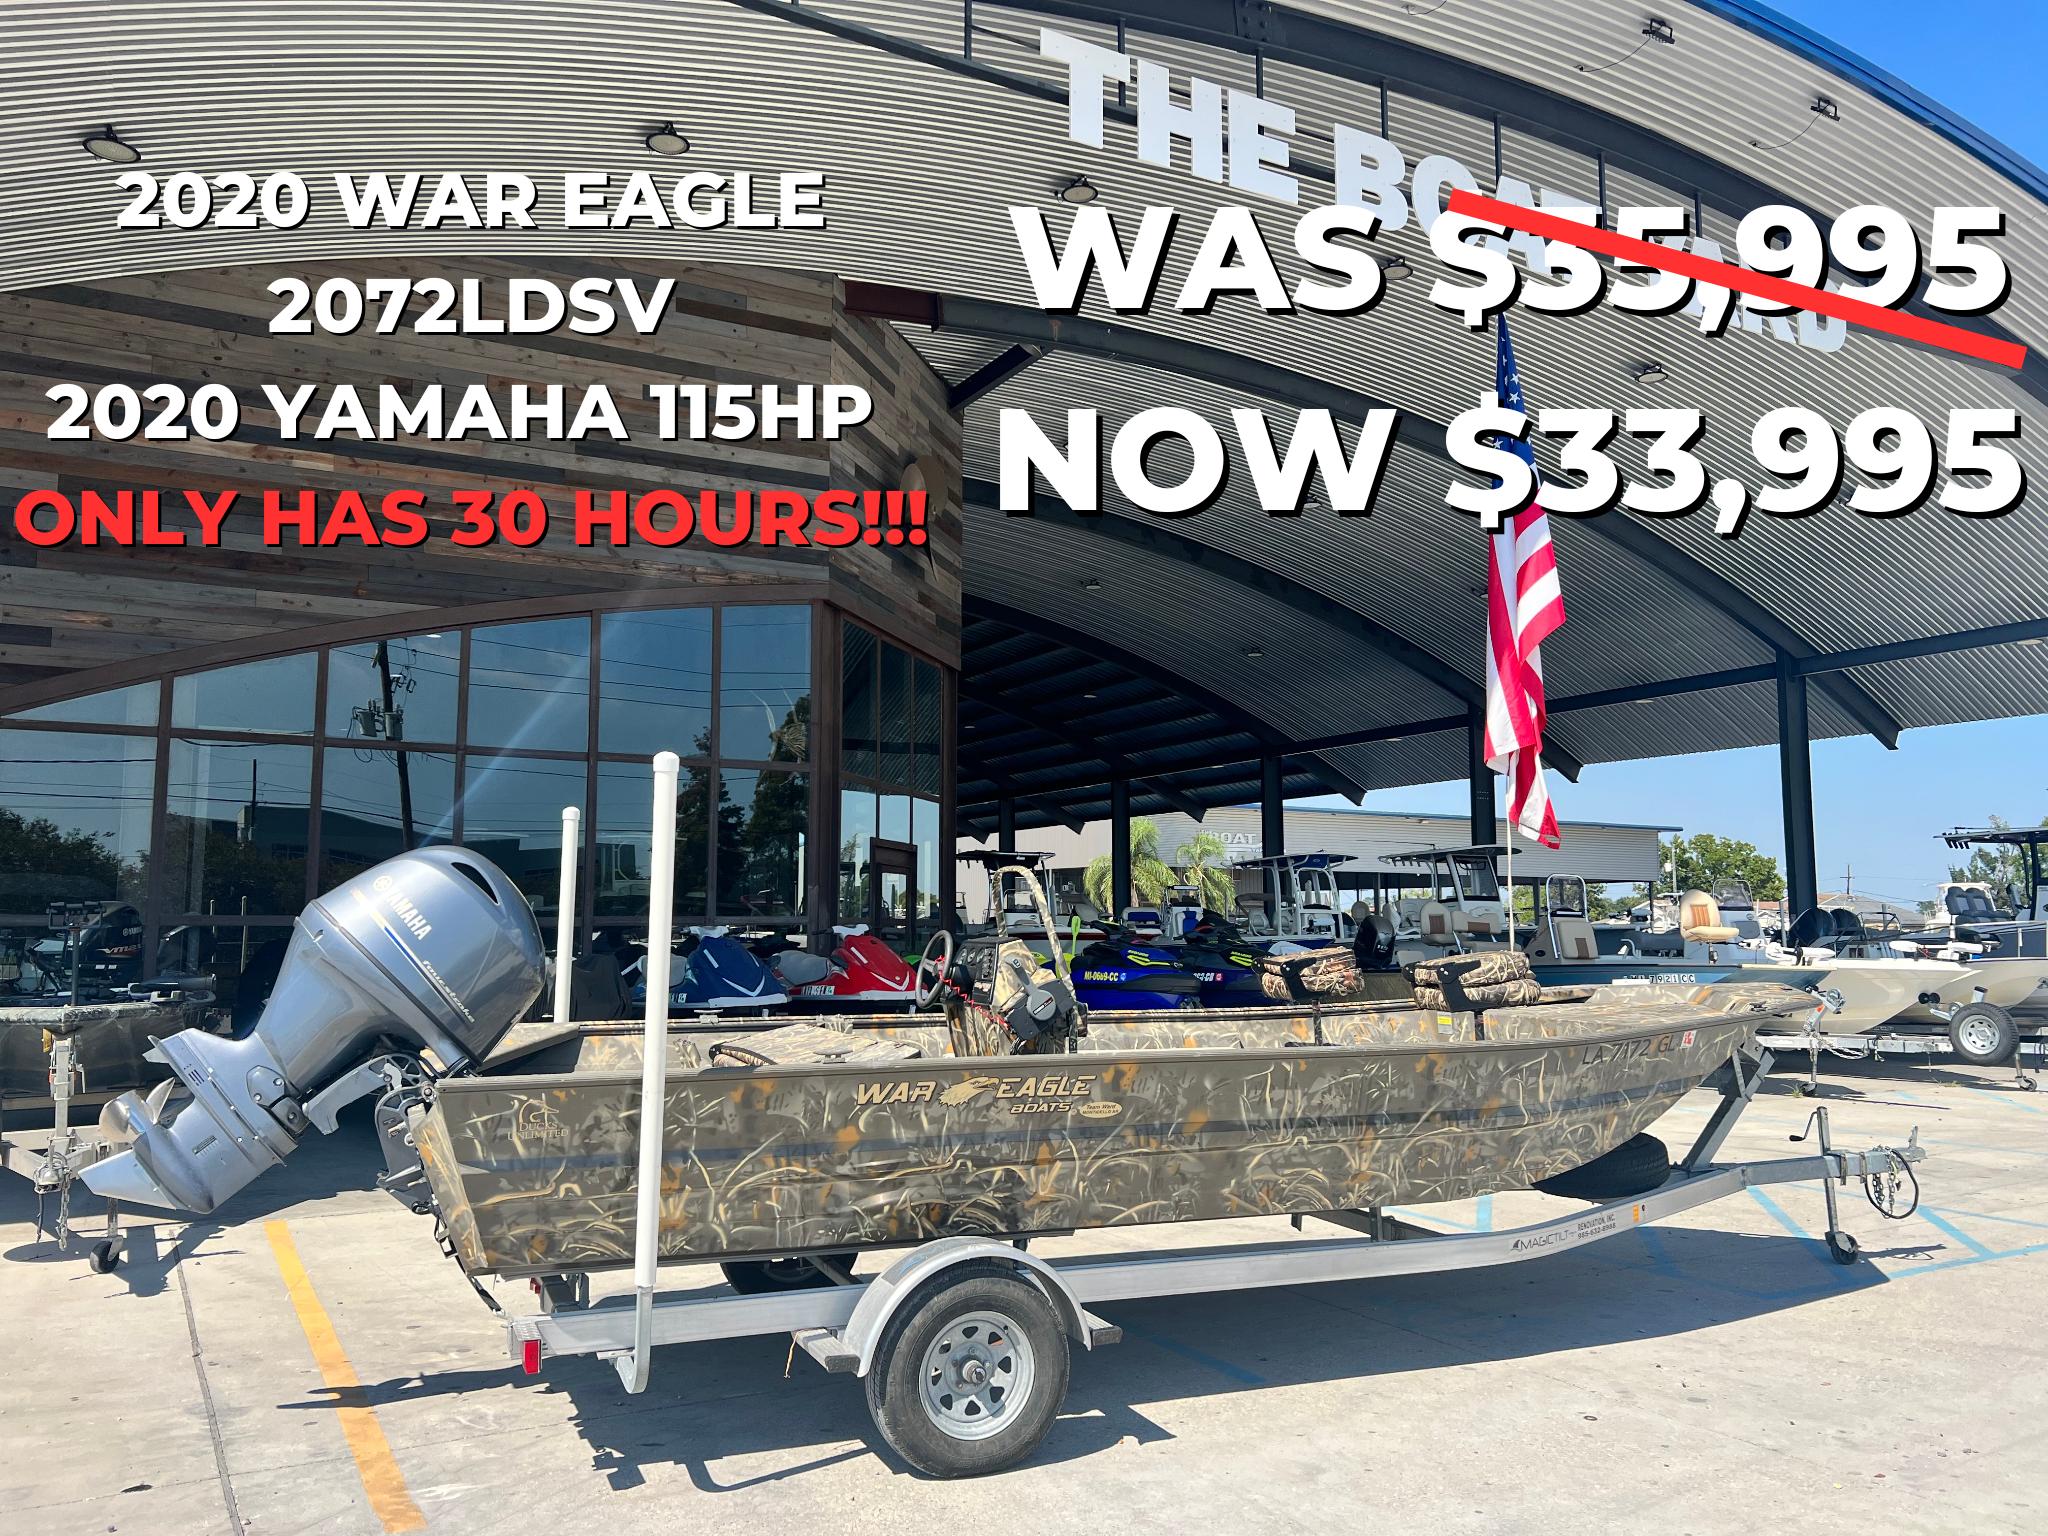 Used 2020 War Eagle 2072LDSV, 70072 Marrero - Boat Trader